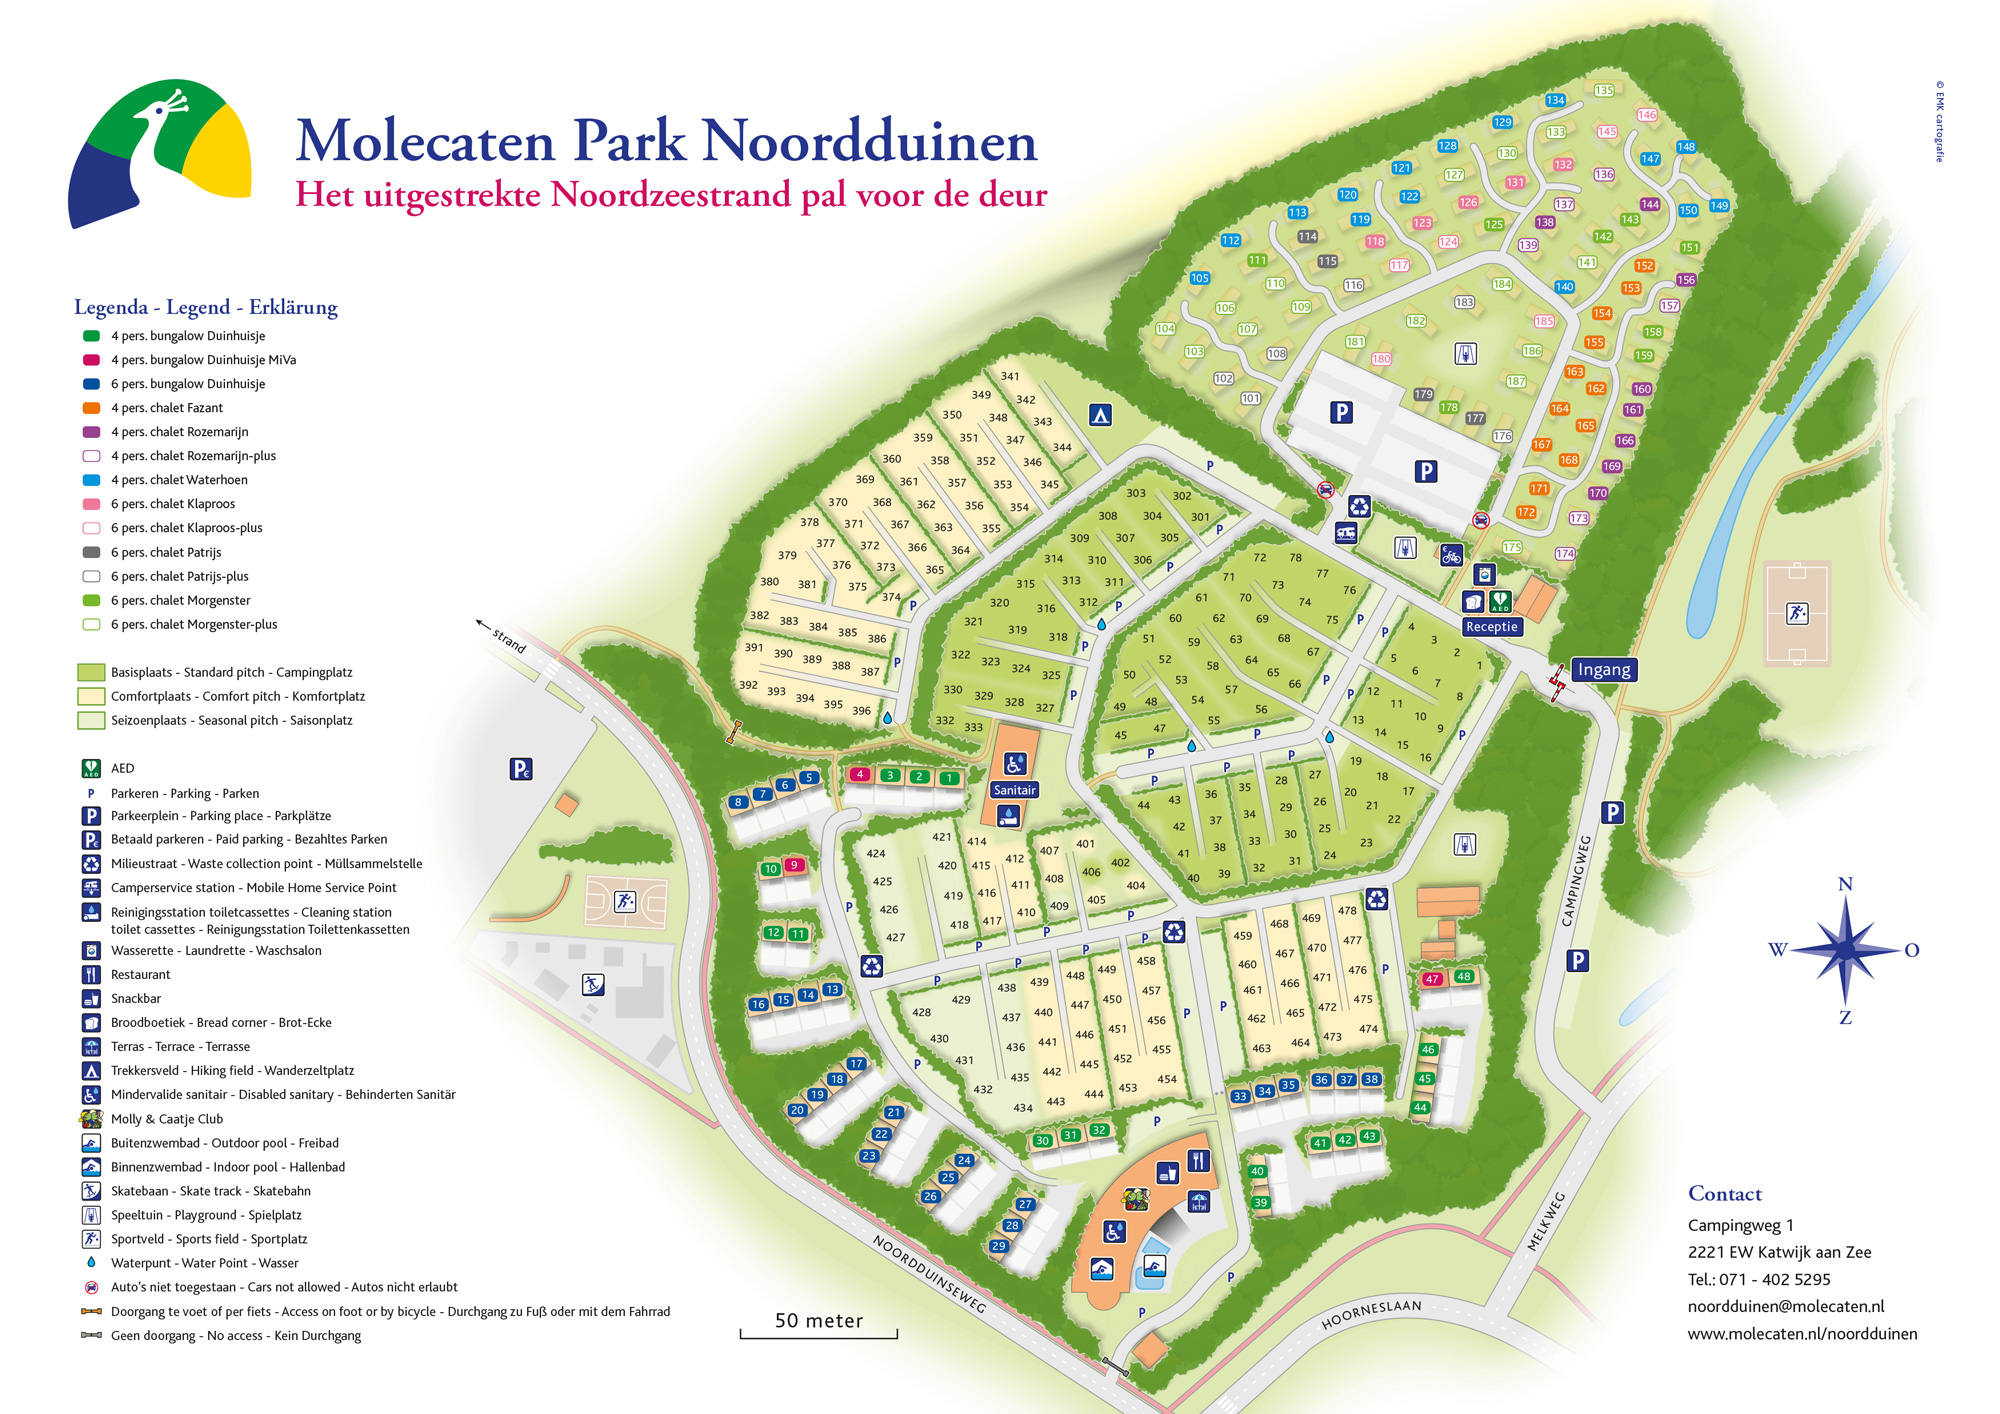 Lageplan Molecaten Park Noordduinen